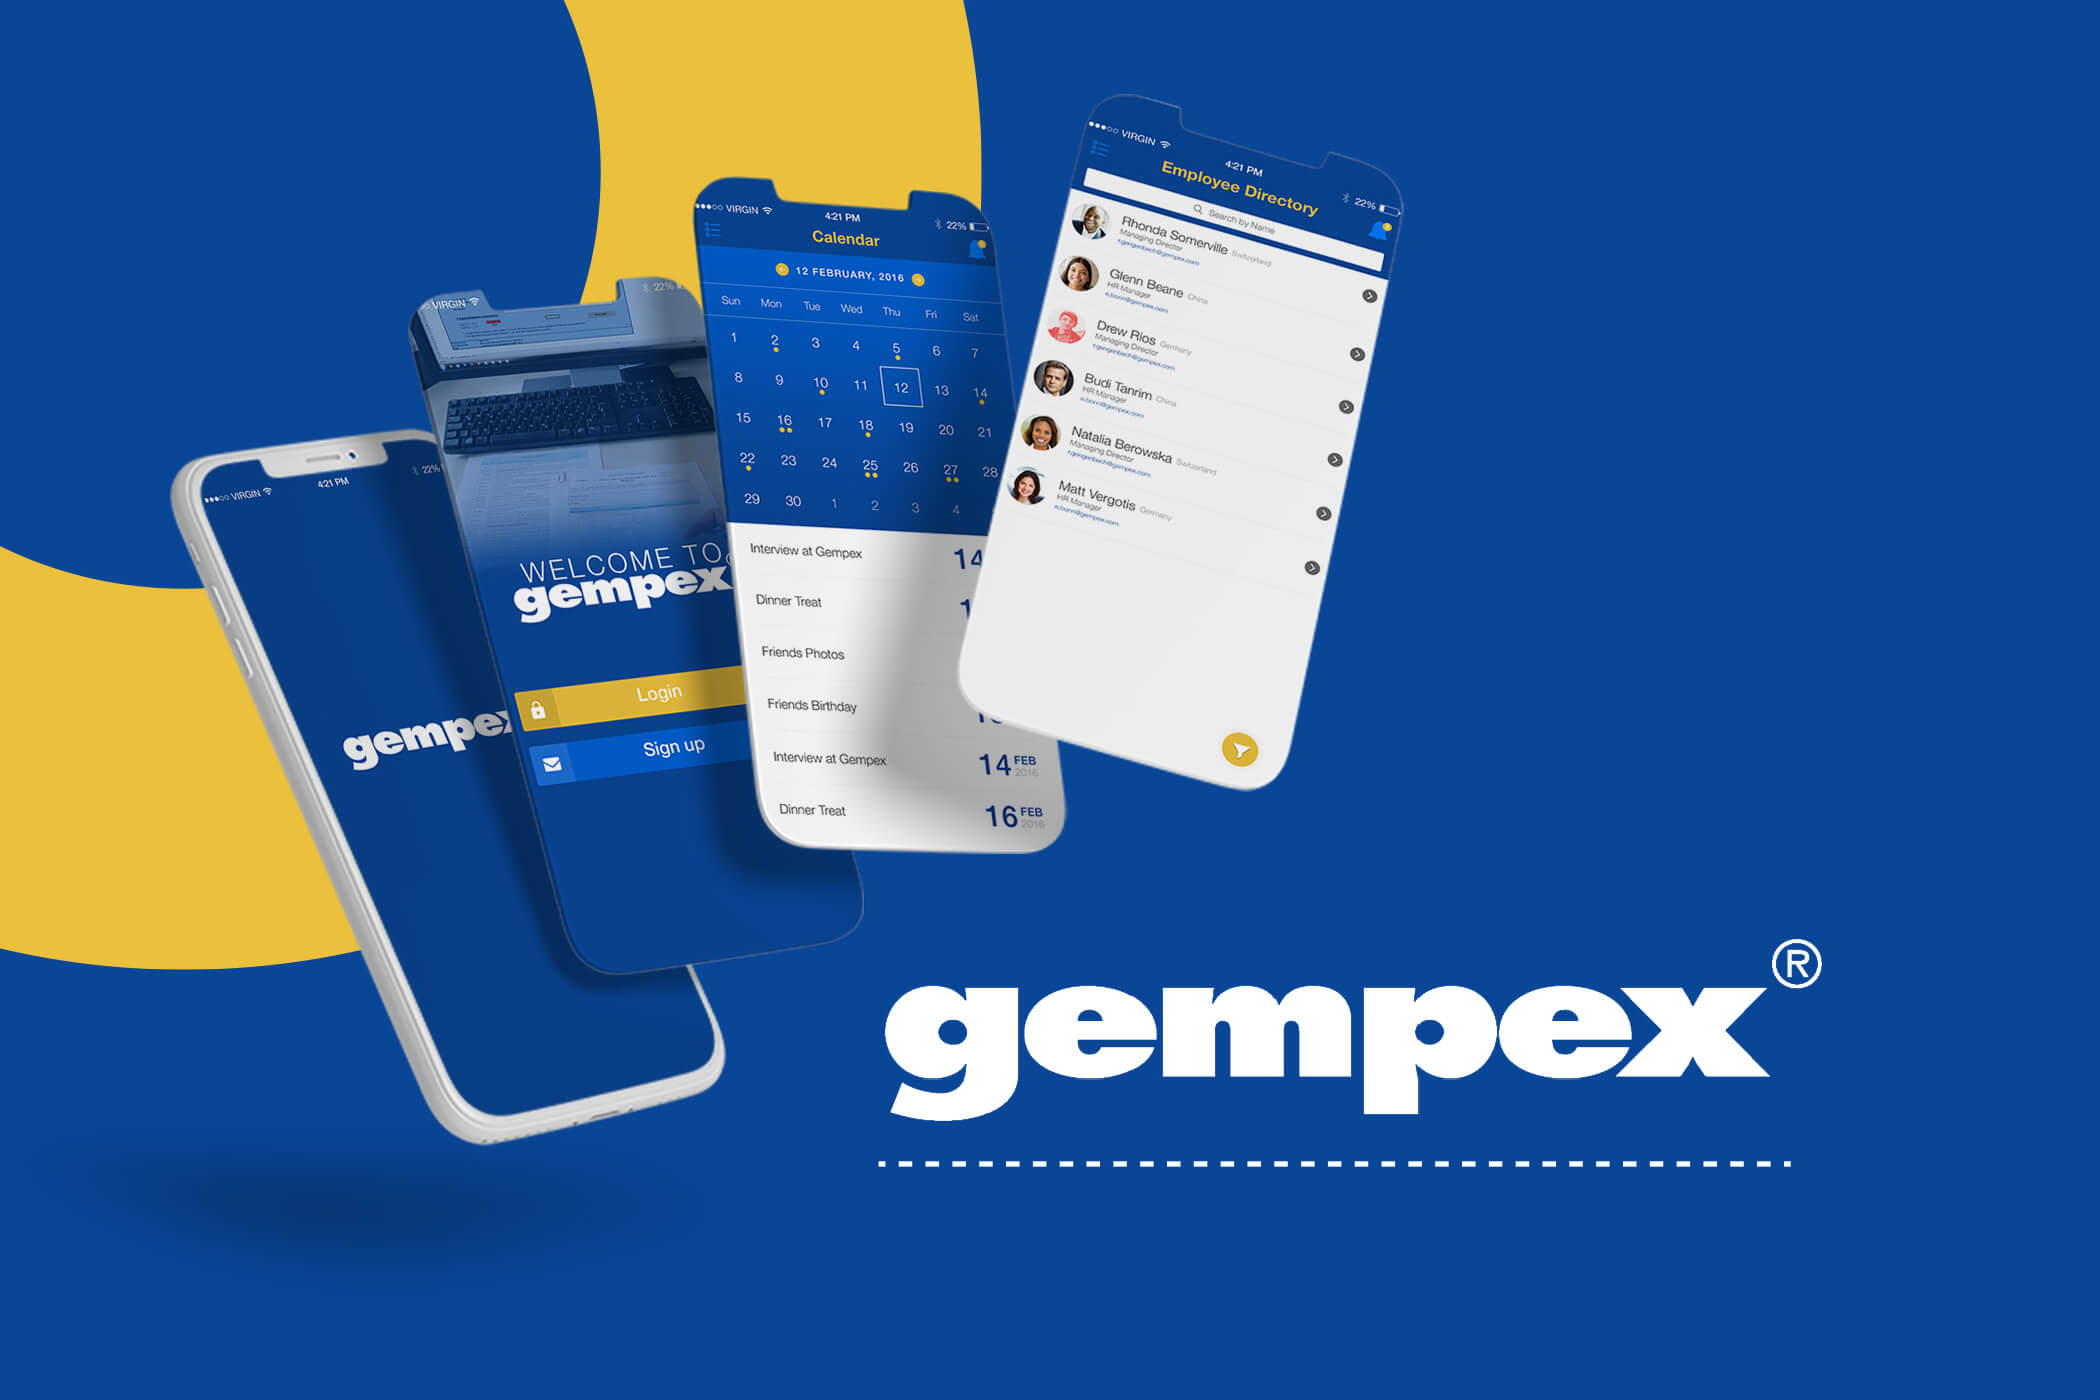 Gempex (Daily Update App)